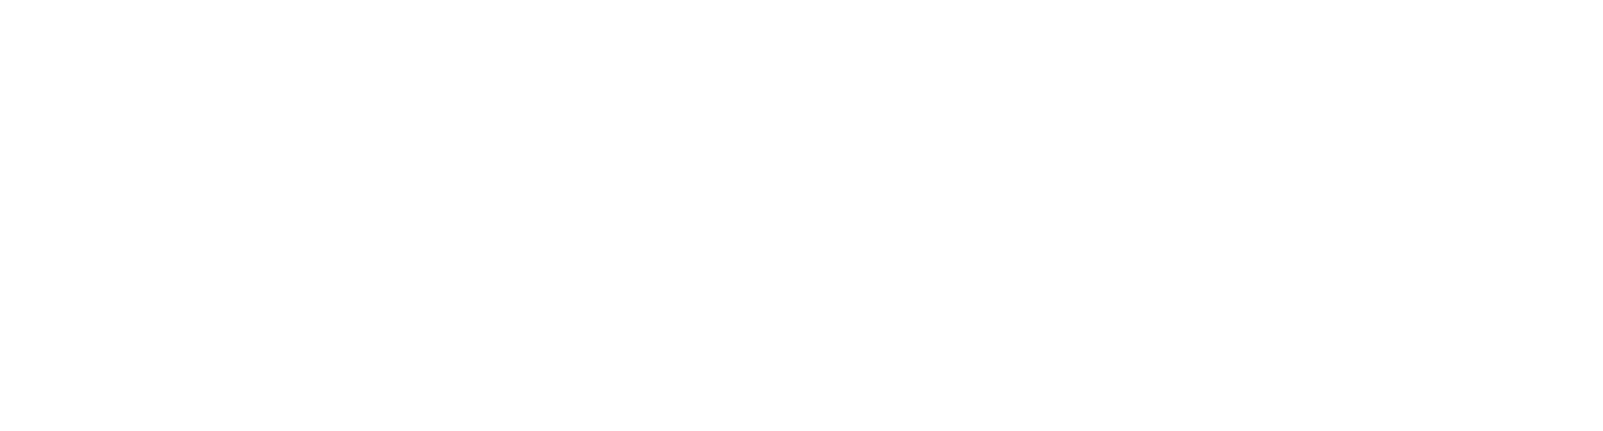 Carlton & Associates Real Estate